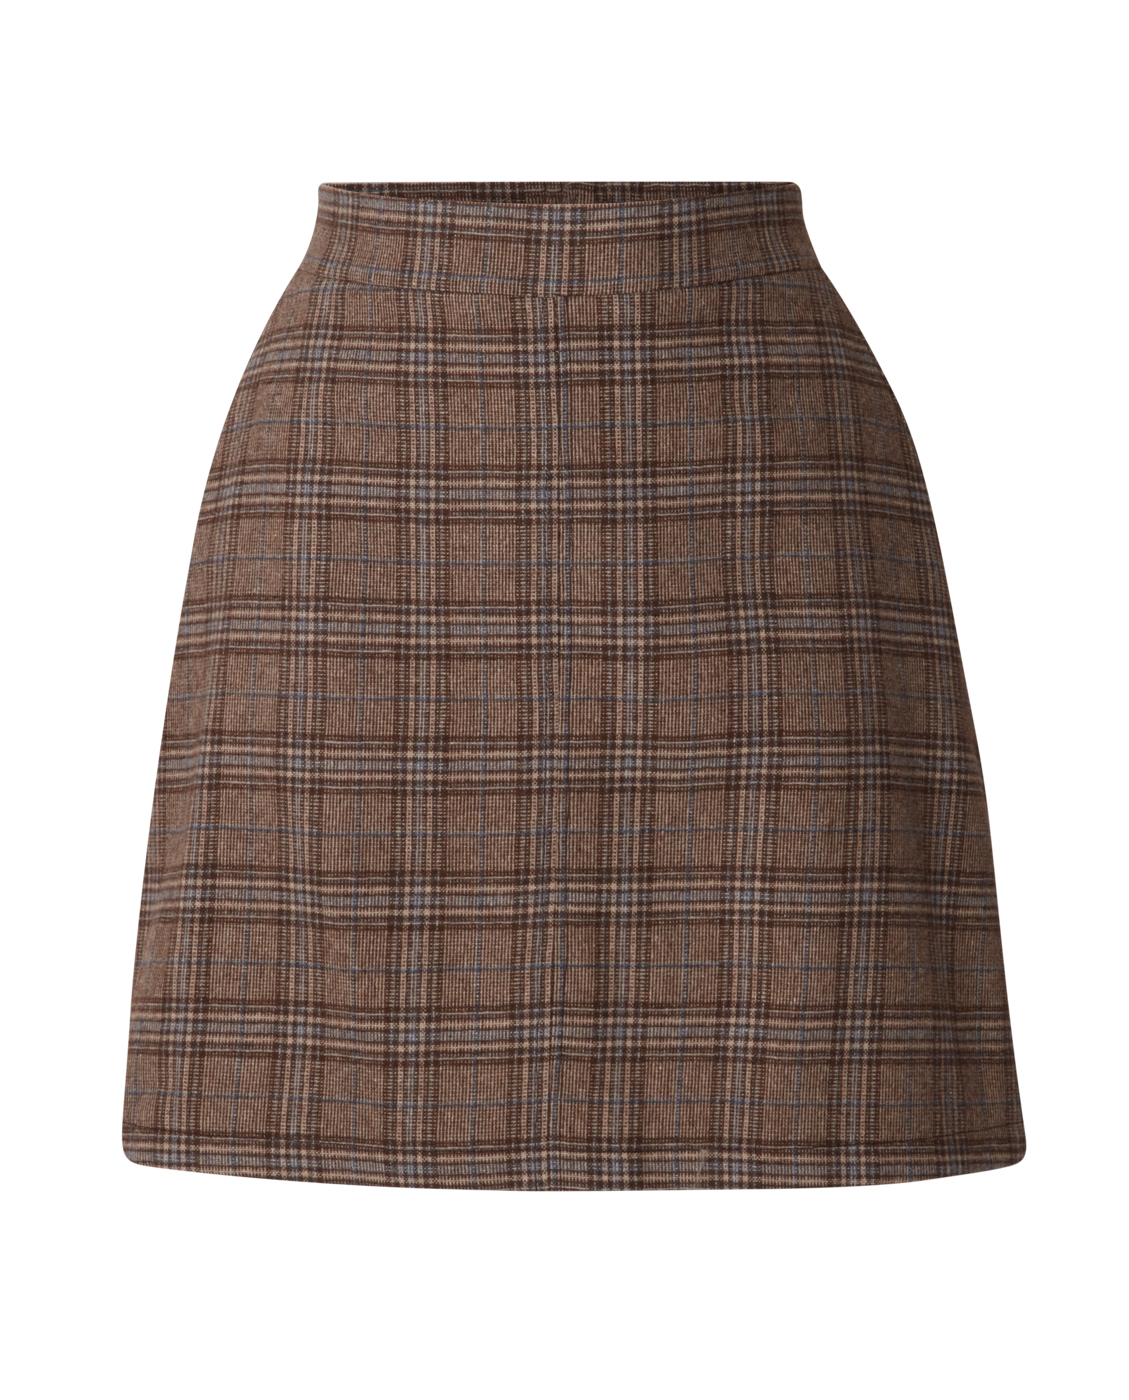 Reese Tailored Wool Blend Skirt